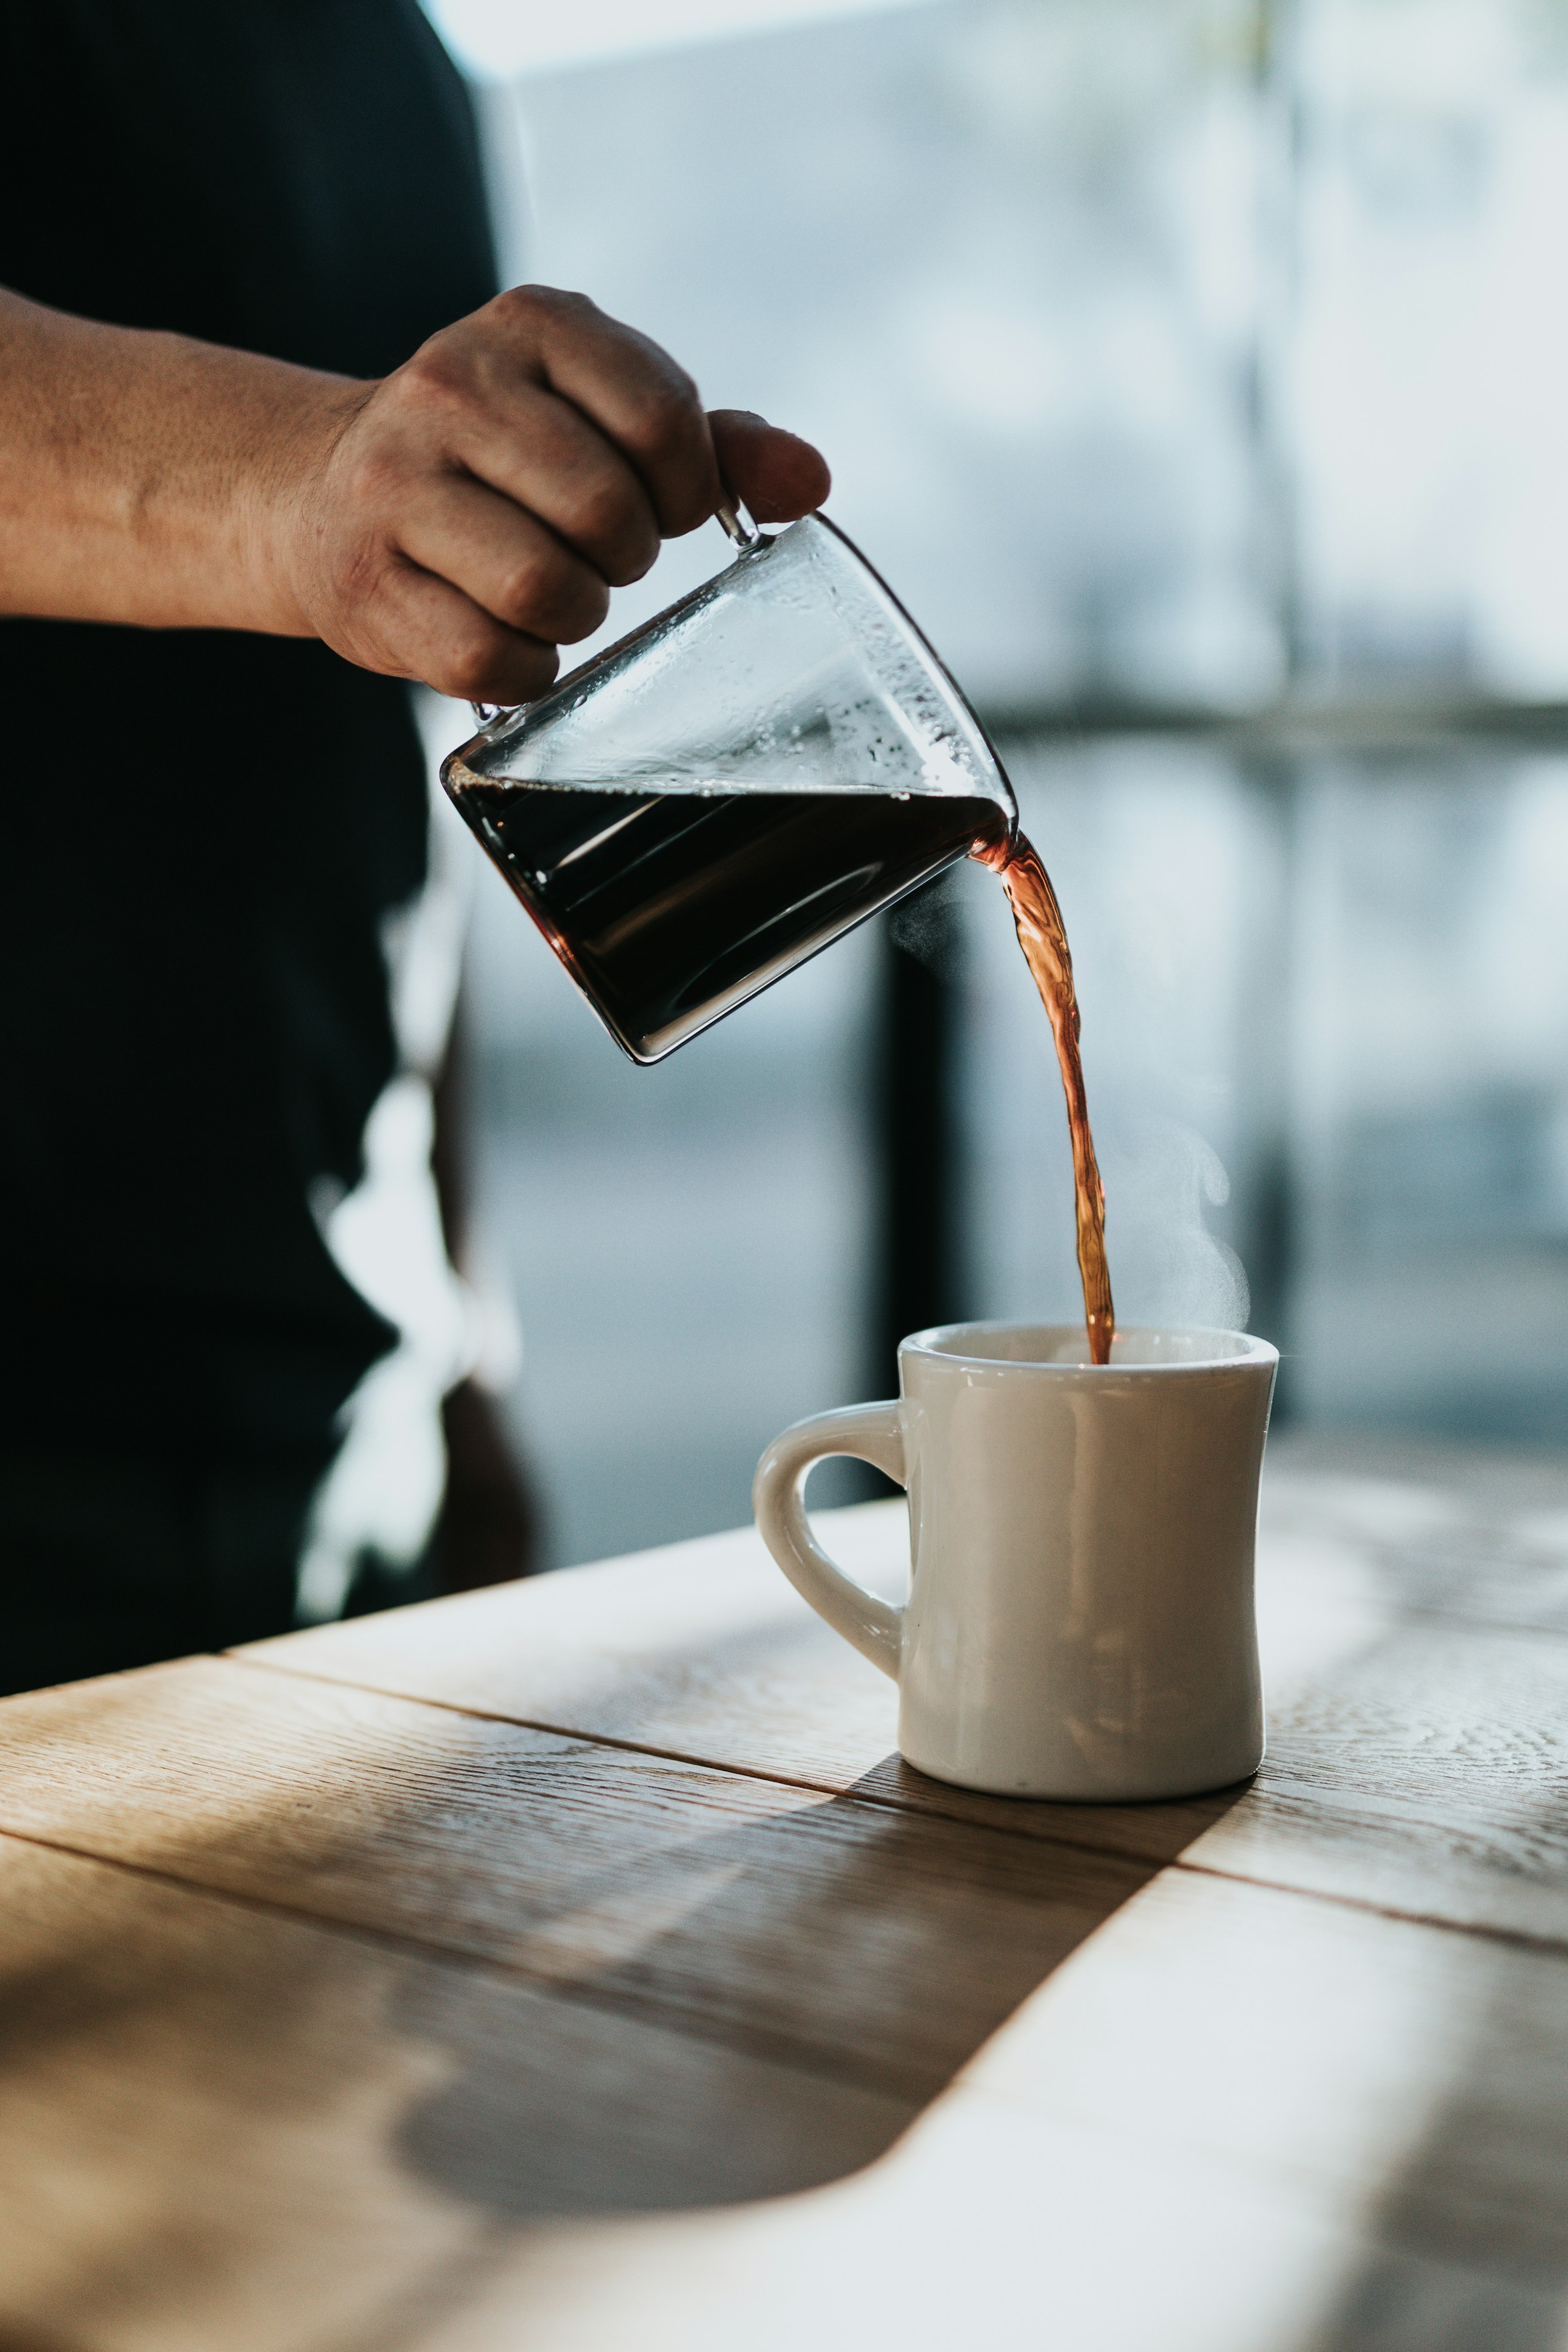 Person pouring coffee into a mug | Source: Unsplash